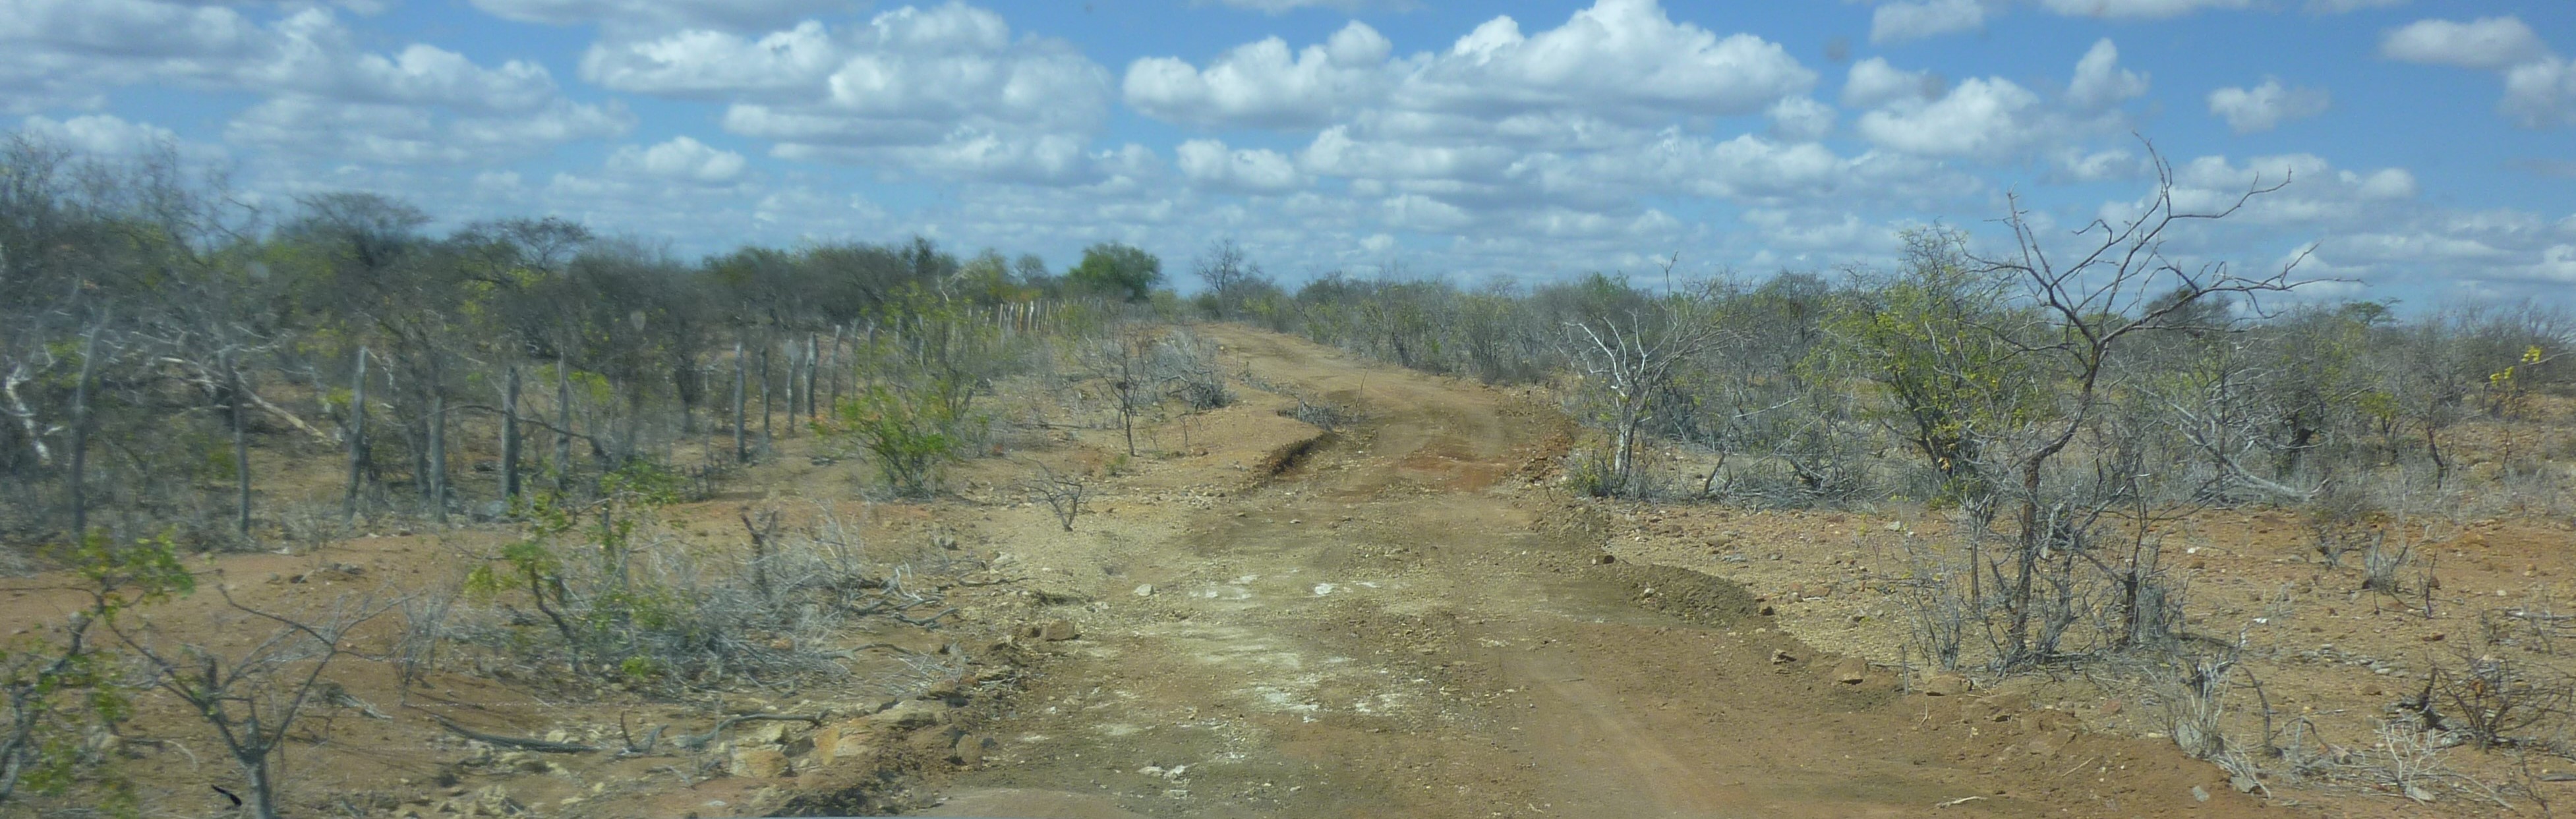 Wege durch die Caatinga